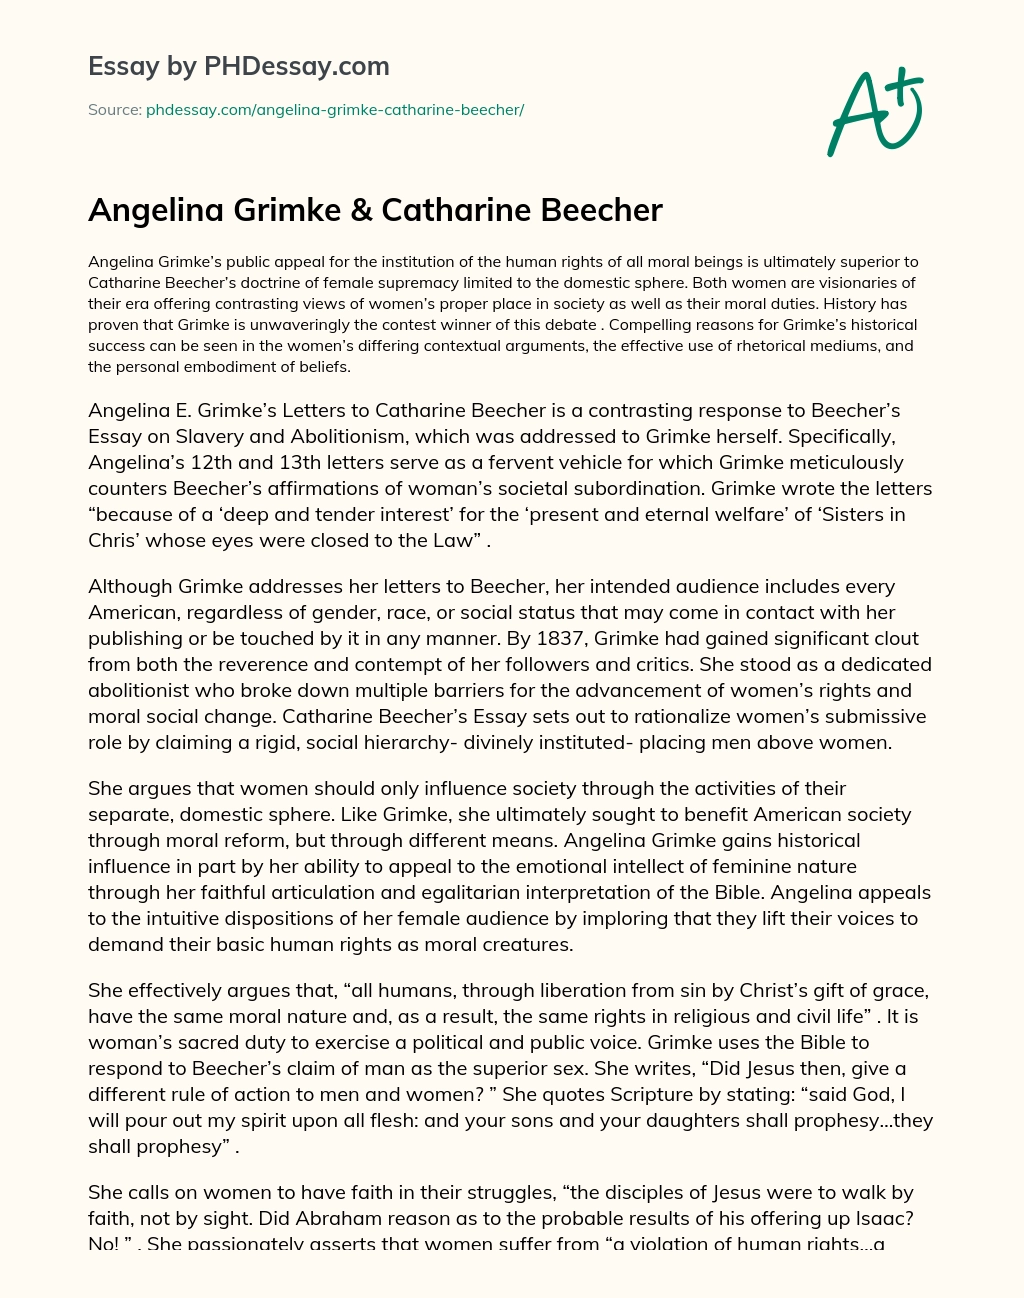 Angelina Grimke & Catharine Beecher essay